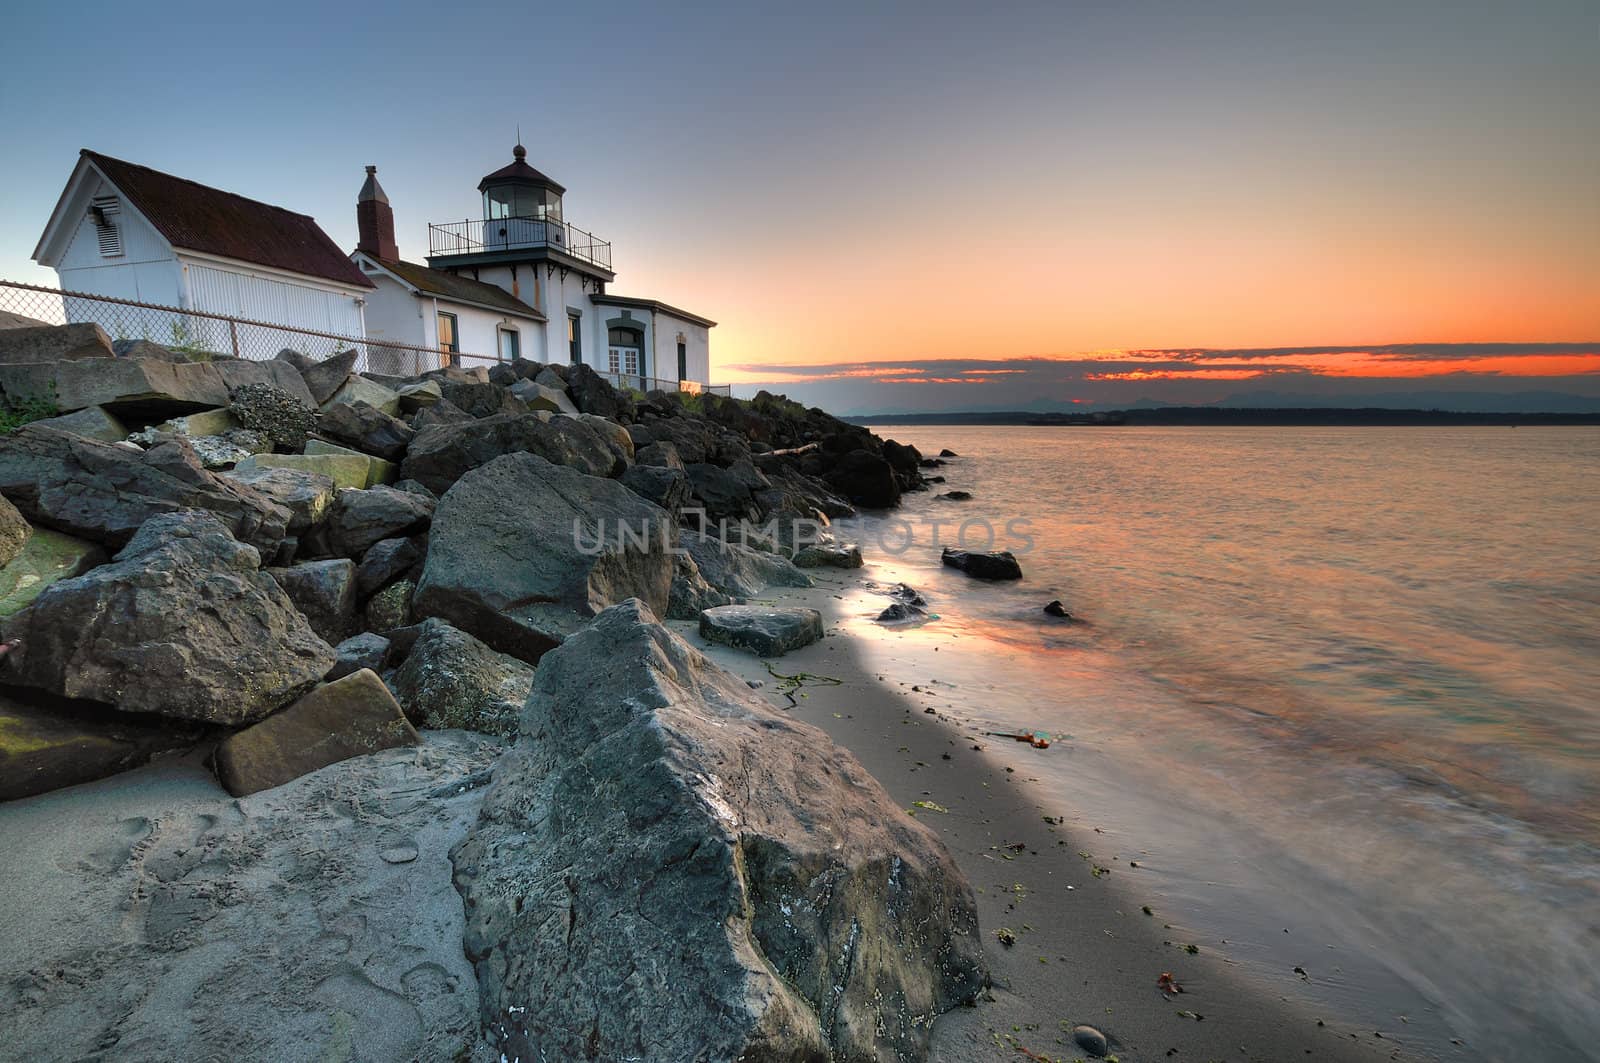 Lighthouse at dusk by neelsky